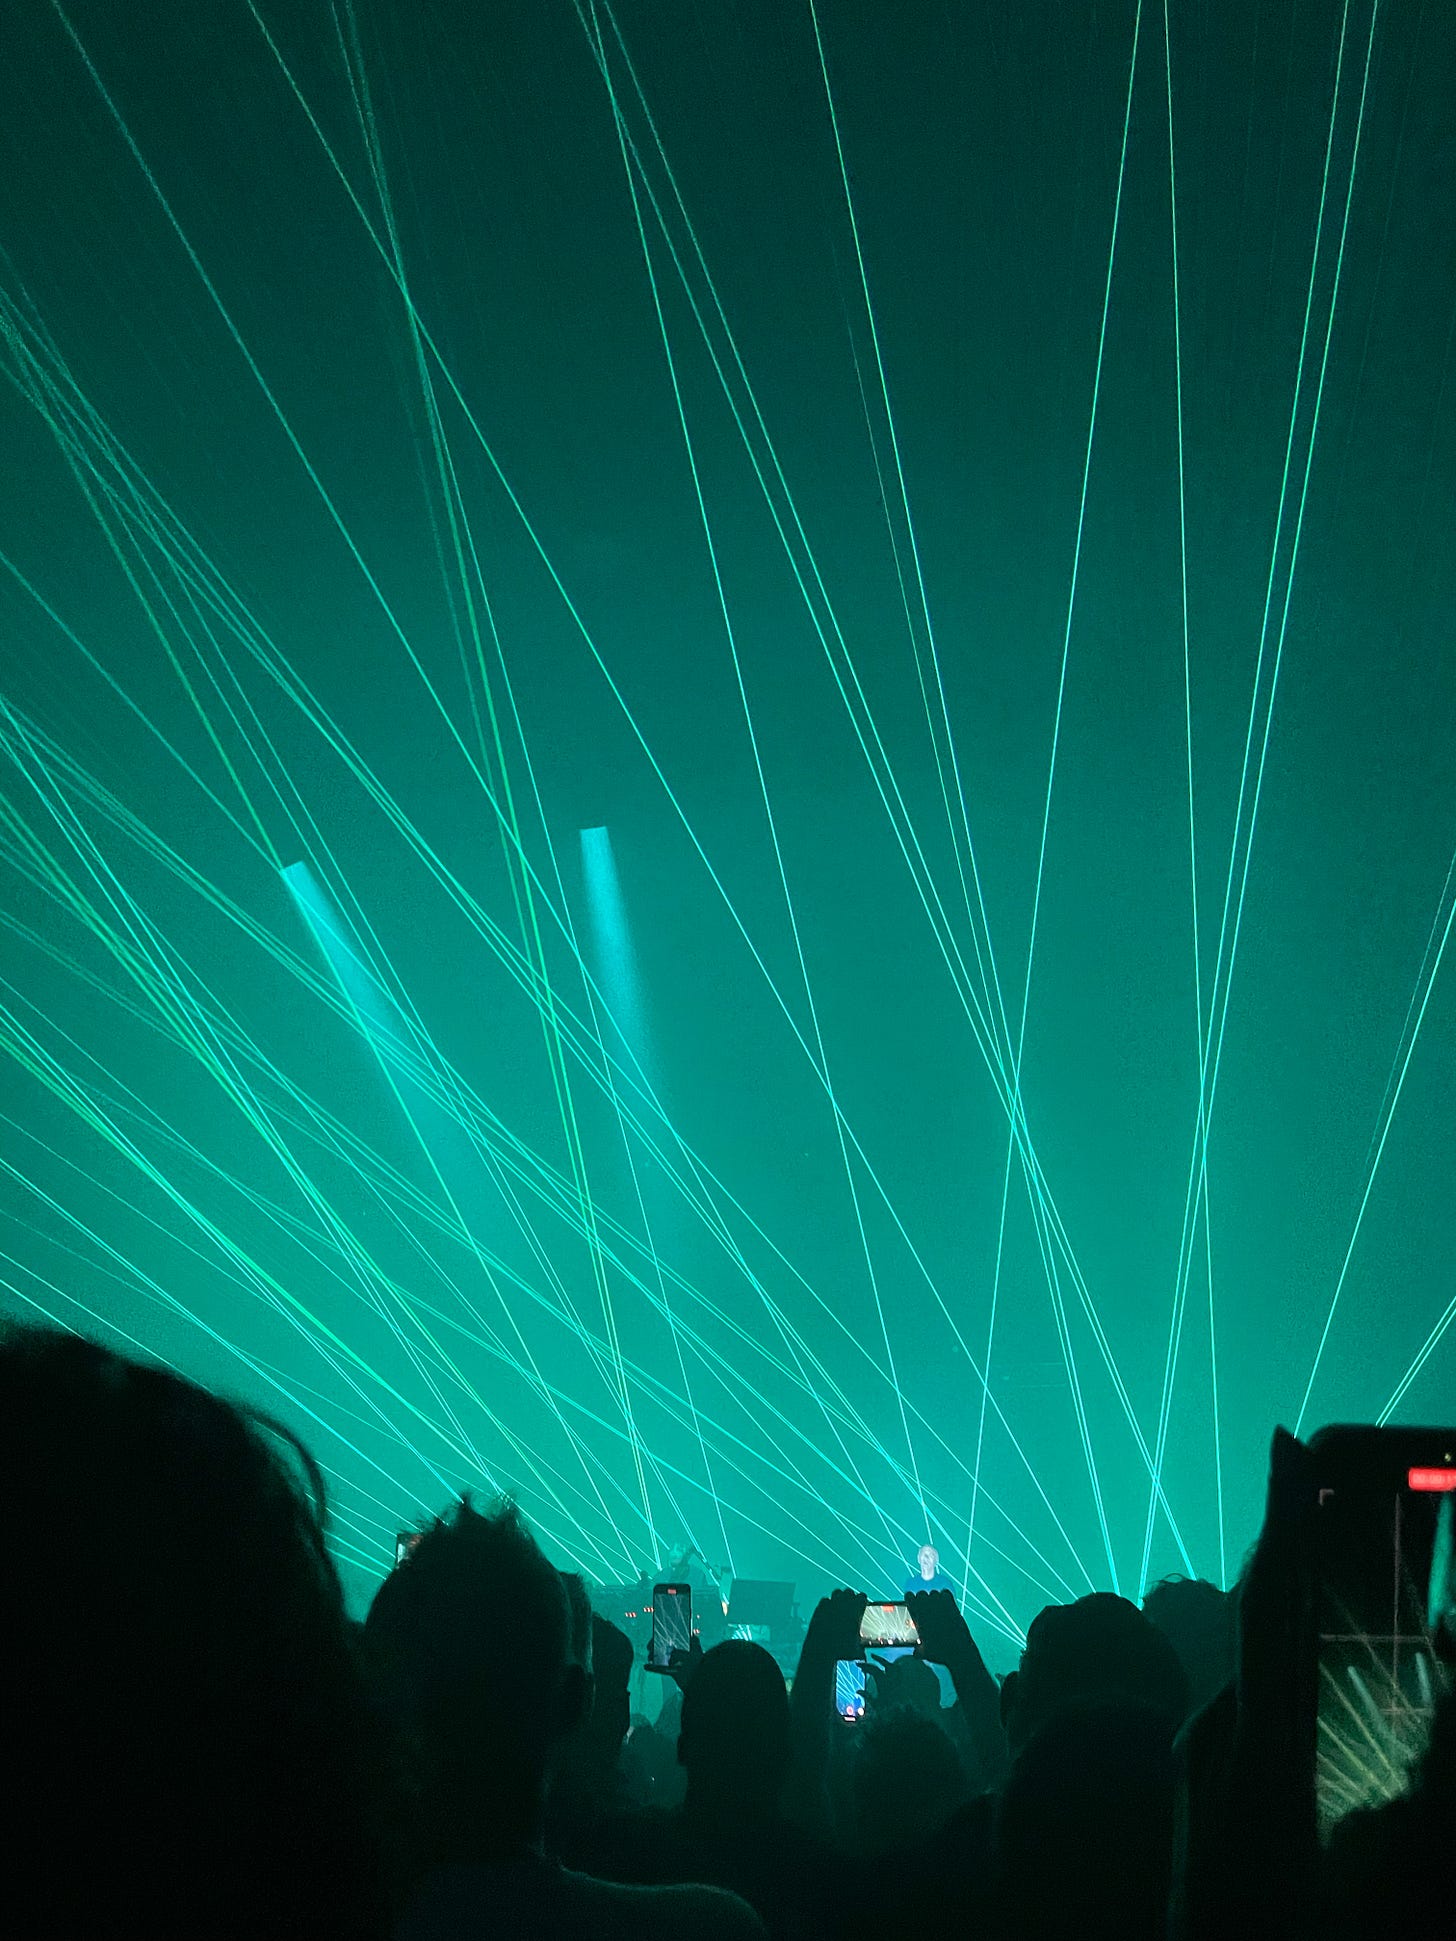 Teal lasers lighting up a concert.